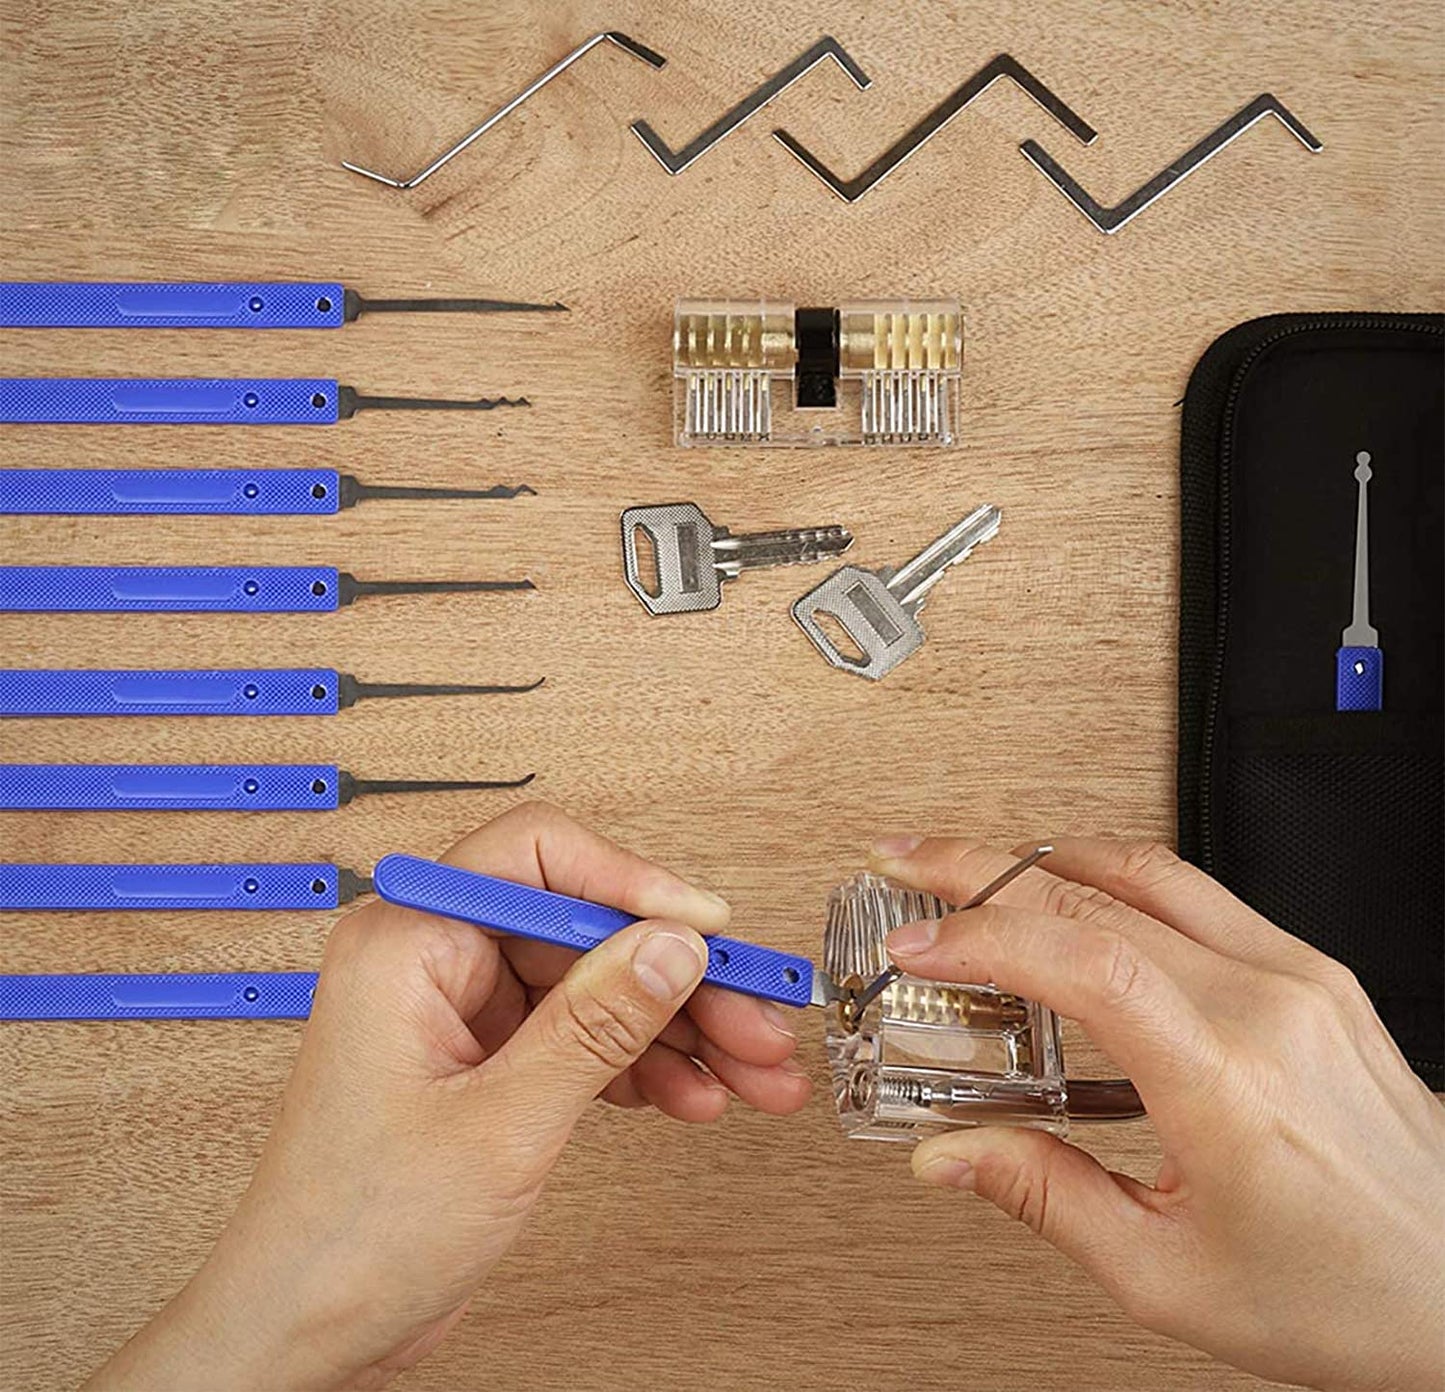 Professional Locksmith Factory Lock Pick Set Practice Lock Training Tool Kit